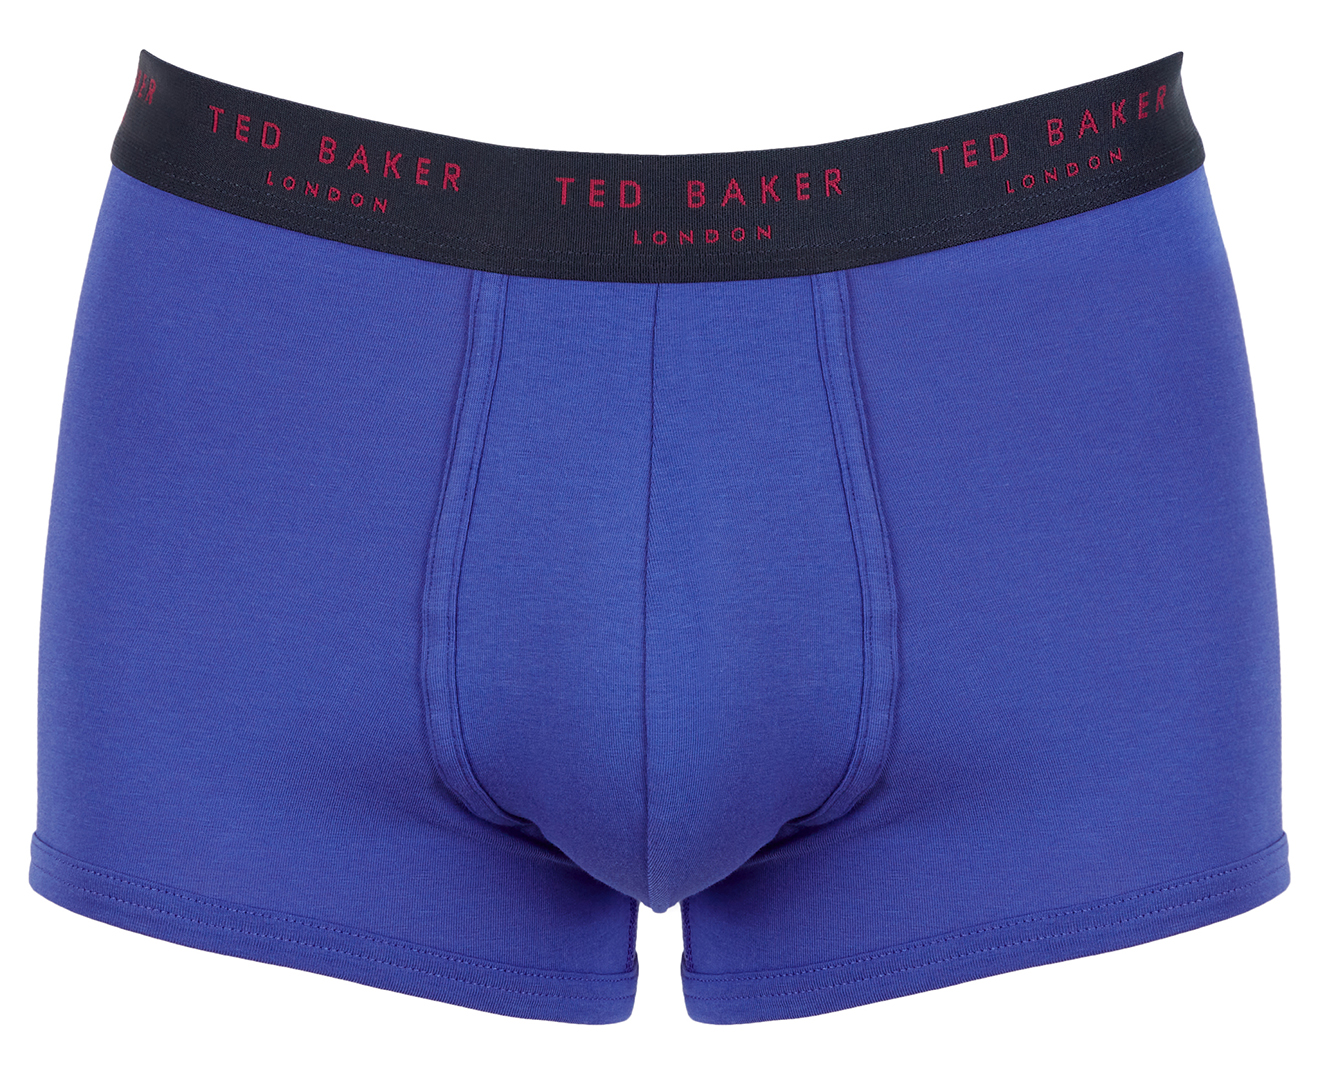 Ted Baker Men's Cotton Stretch Trunks 3-Pack - Dazzling Blue/Ava/Grey ...